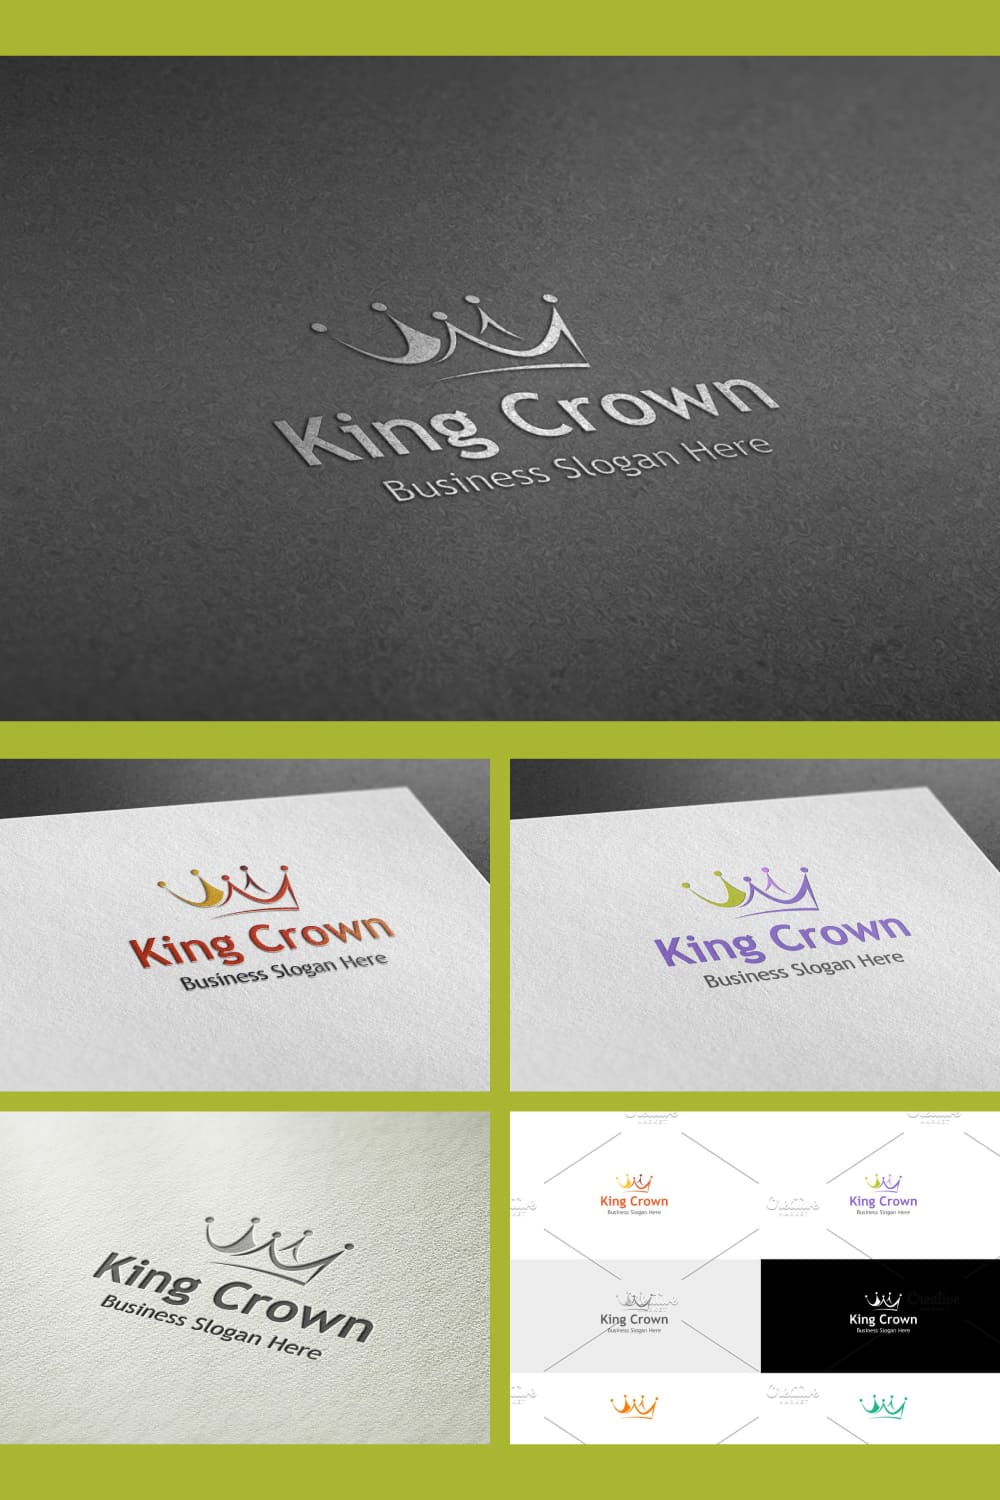 Laconic crown logos.